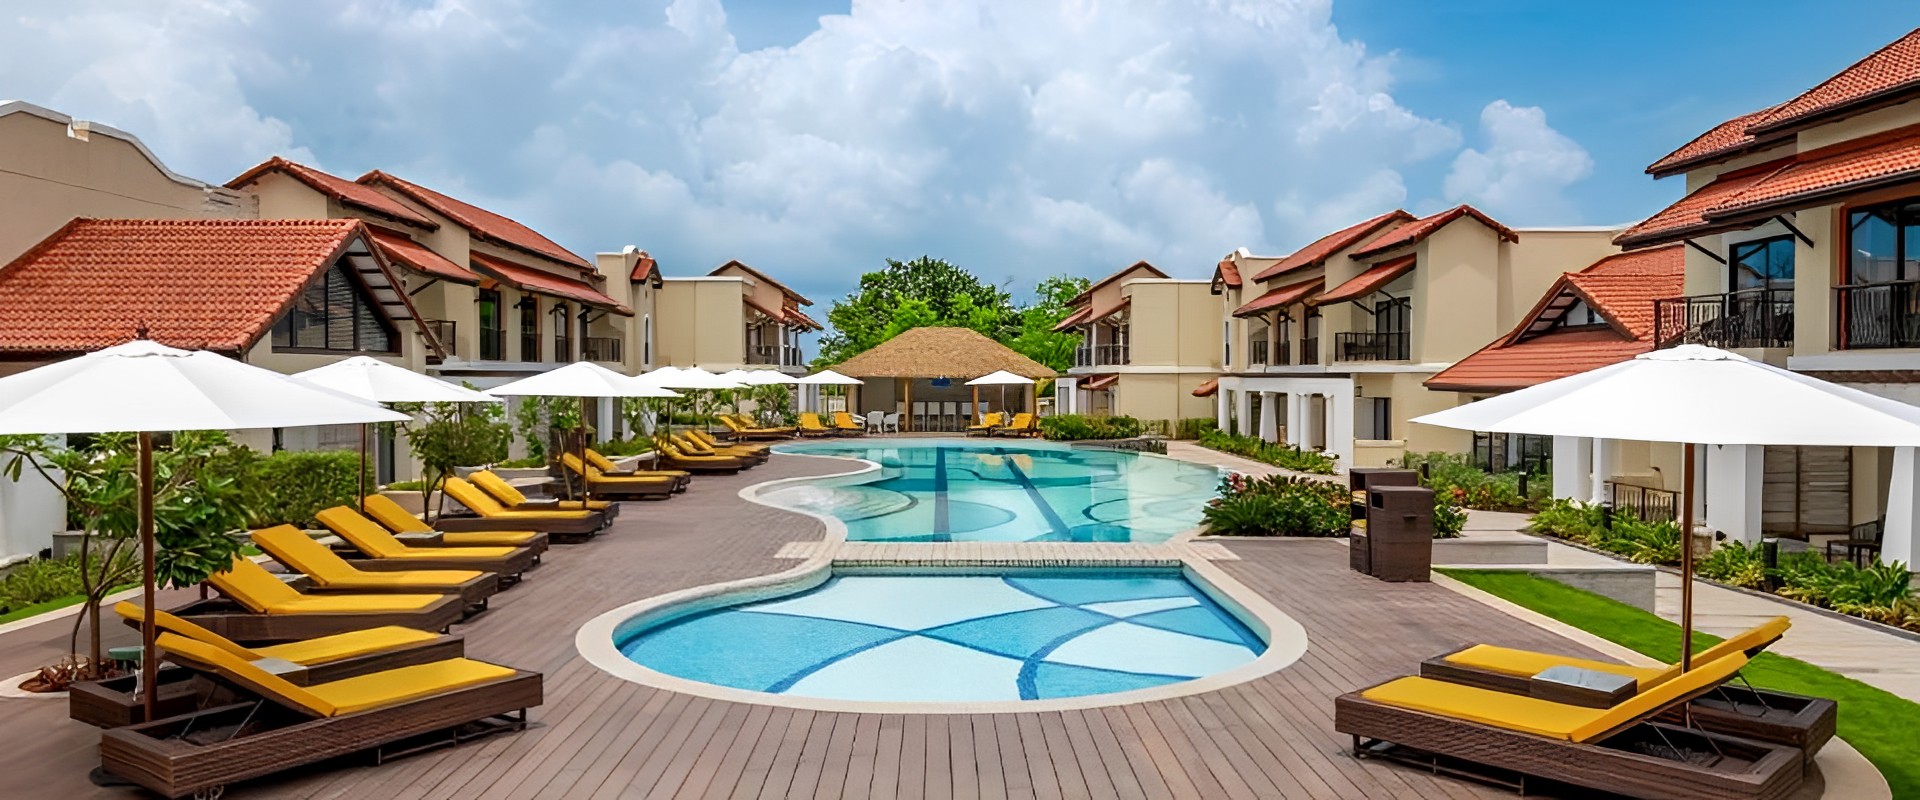 Fairfield By Marriott resort and spa Goa